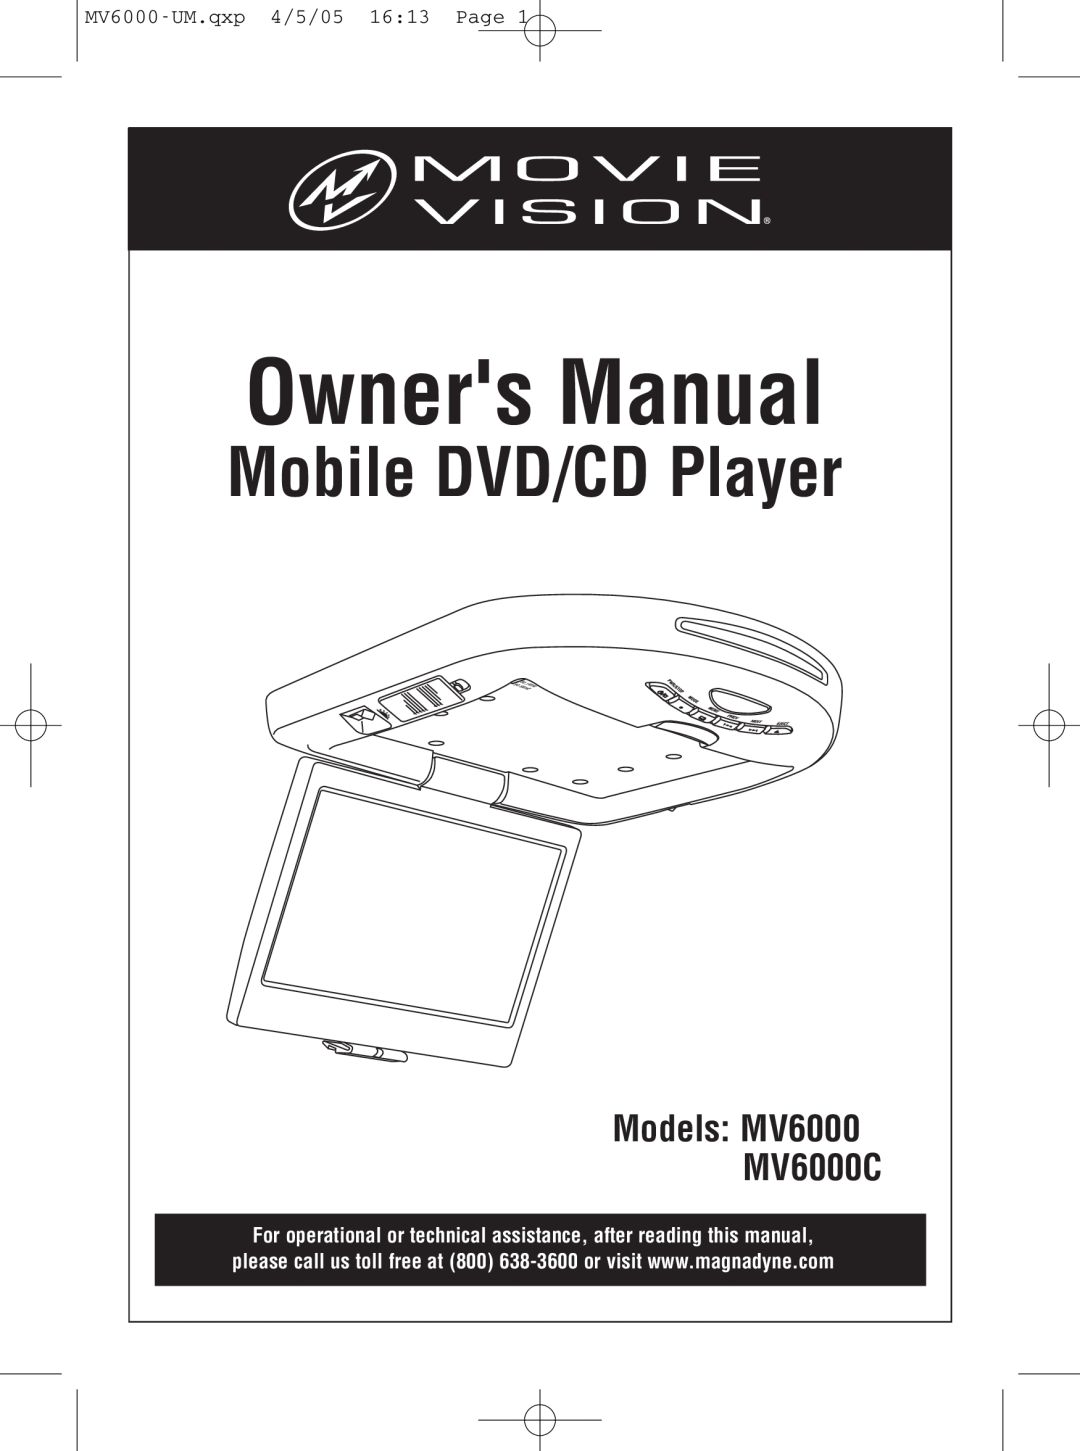 Magnadyne owner manual MV6000-UM.qxp 4/5/05 1613 Page, Owners Manual, Mobile DVD/CD Player, Models MV6000 MV6000C 